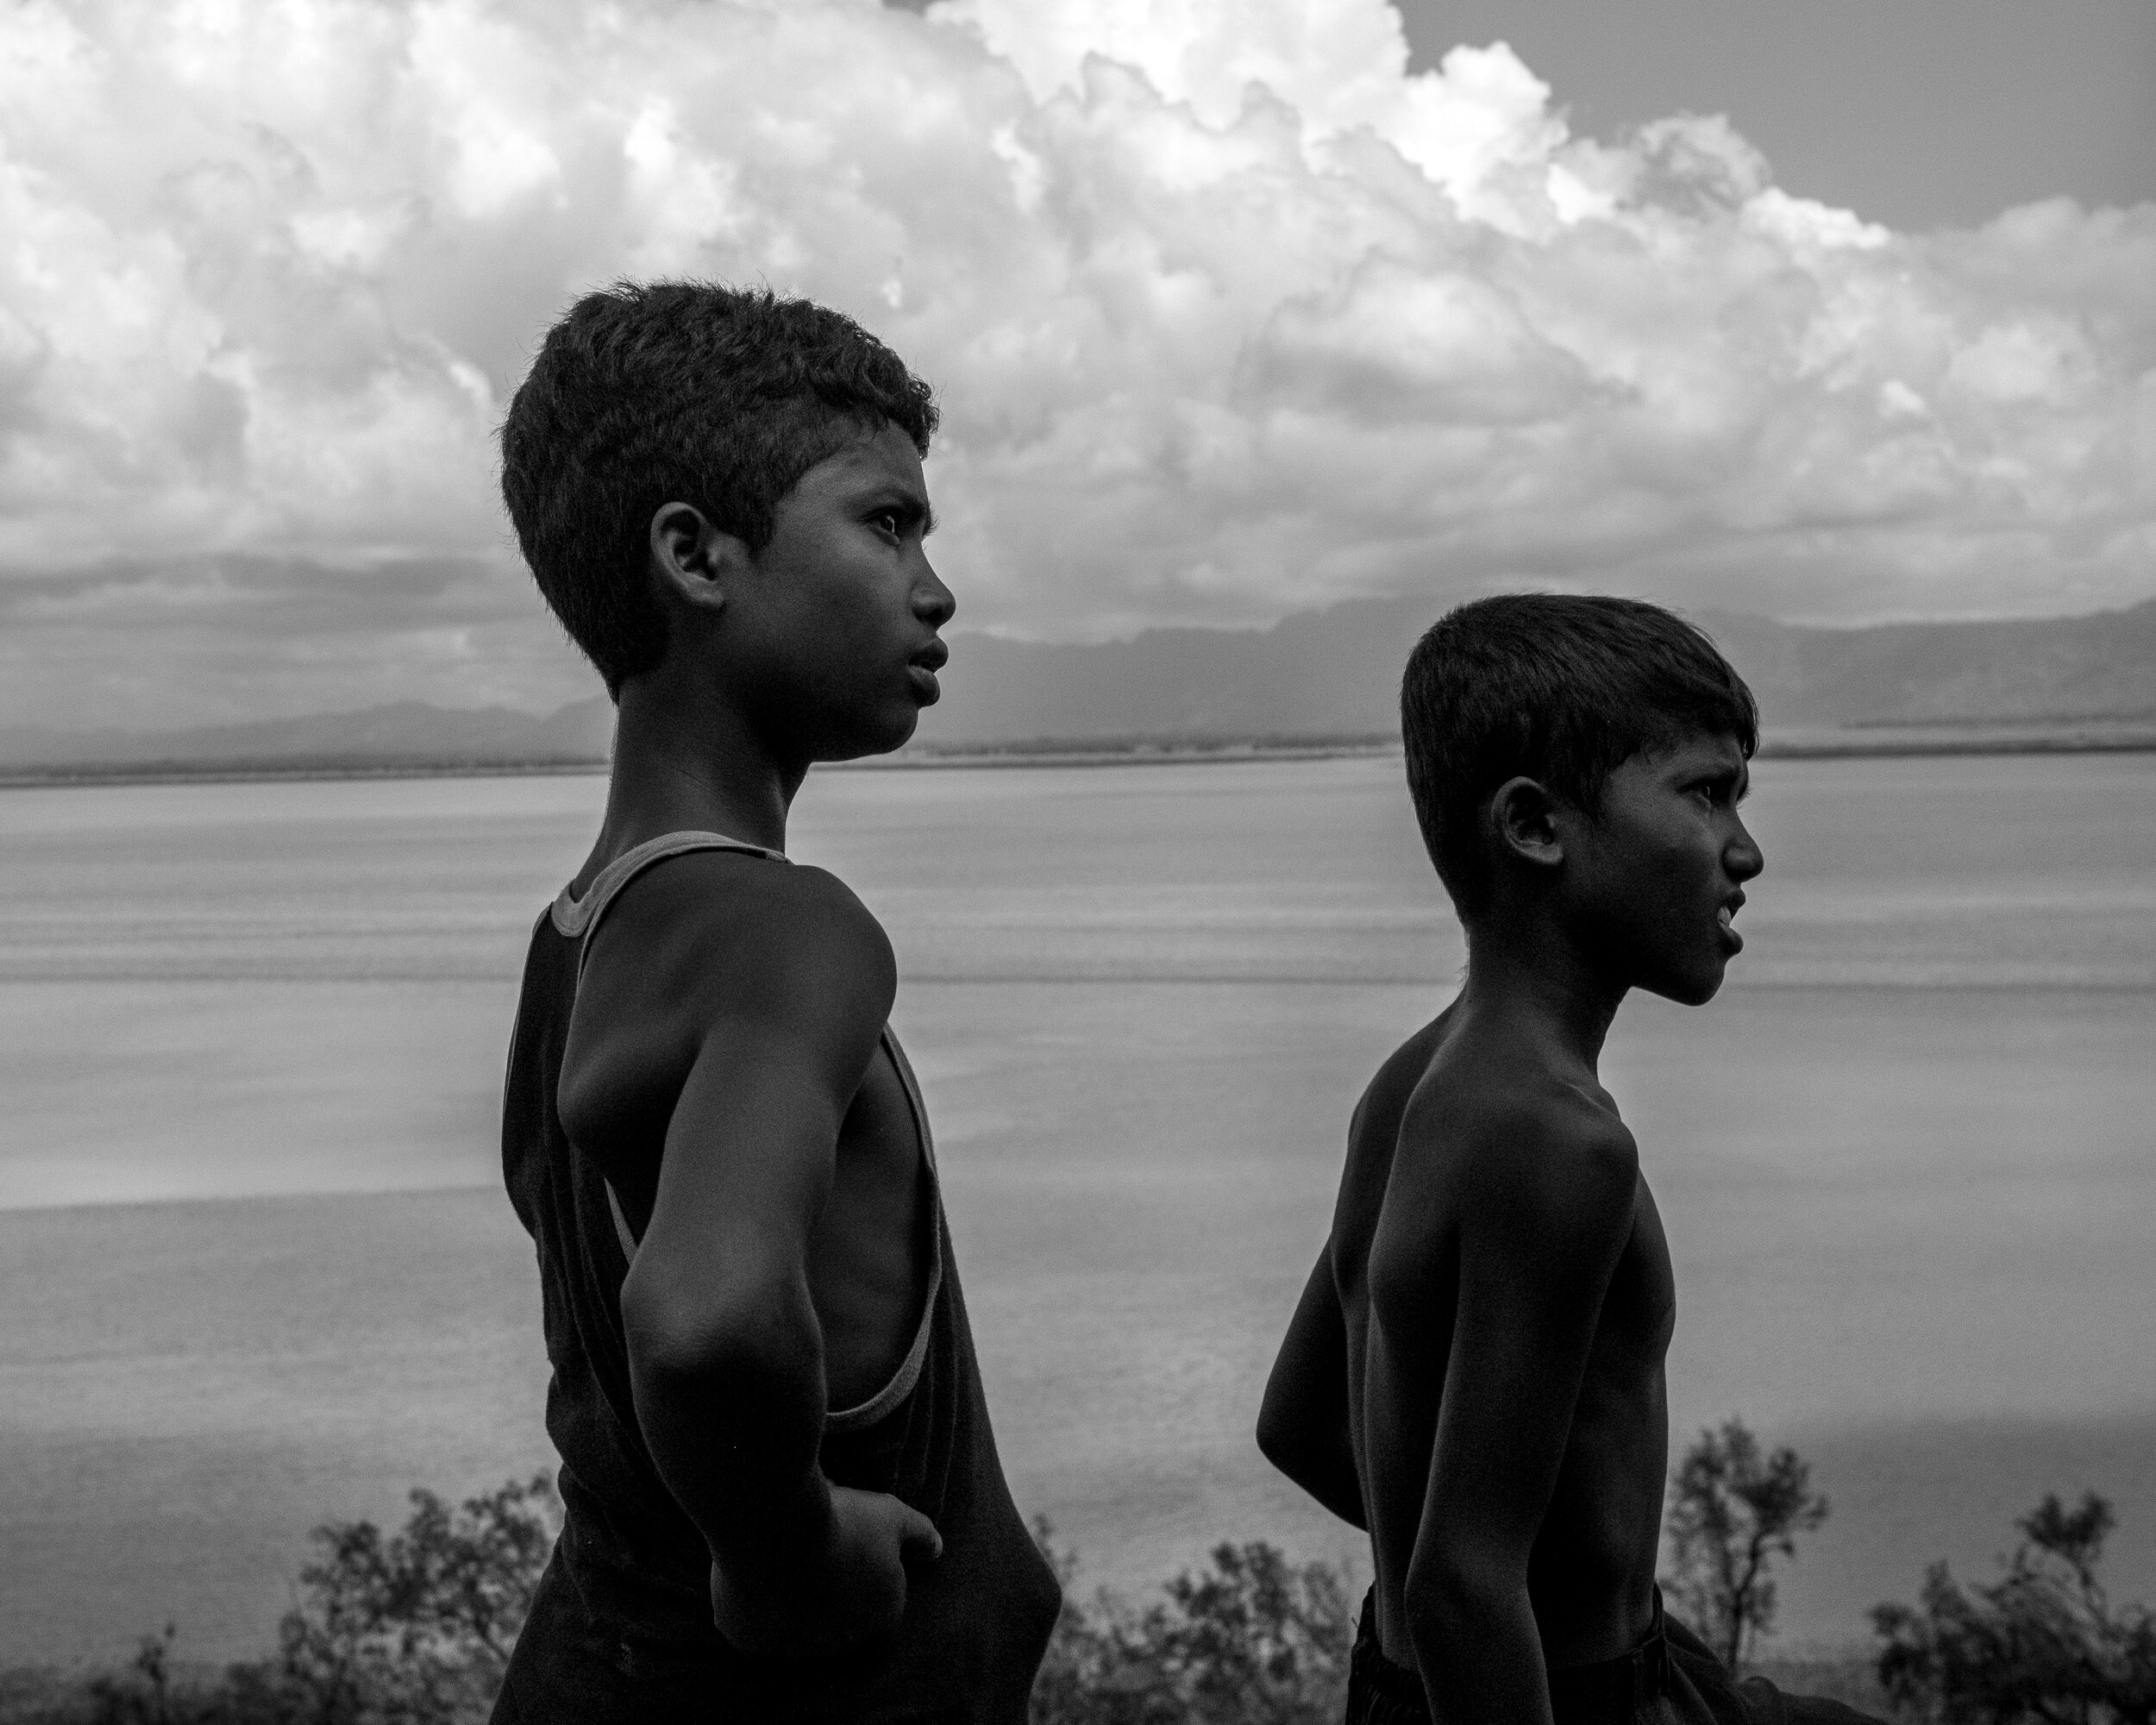  Rohingya children in front of the Naf River, Myanmar border 